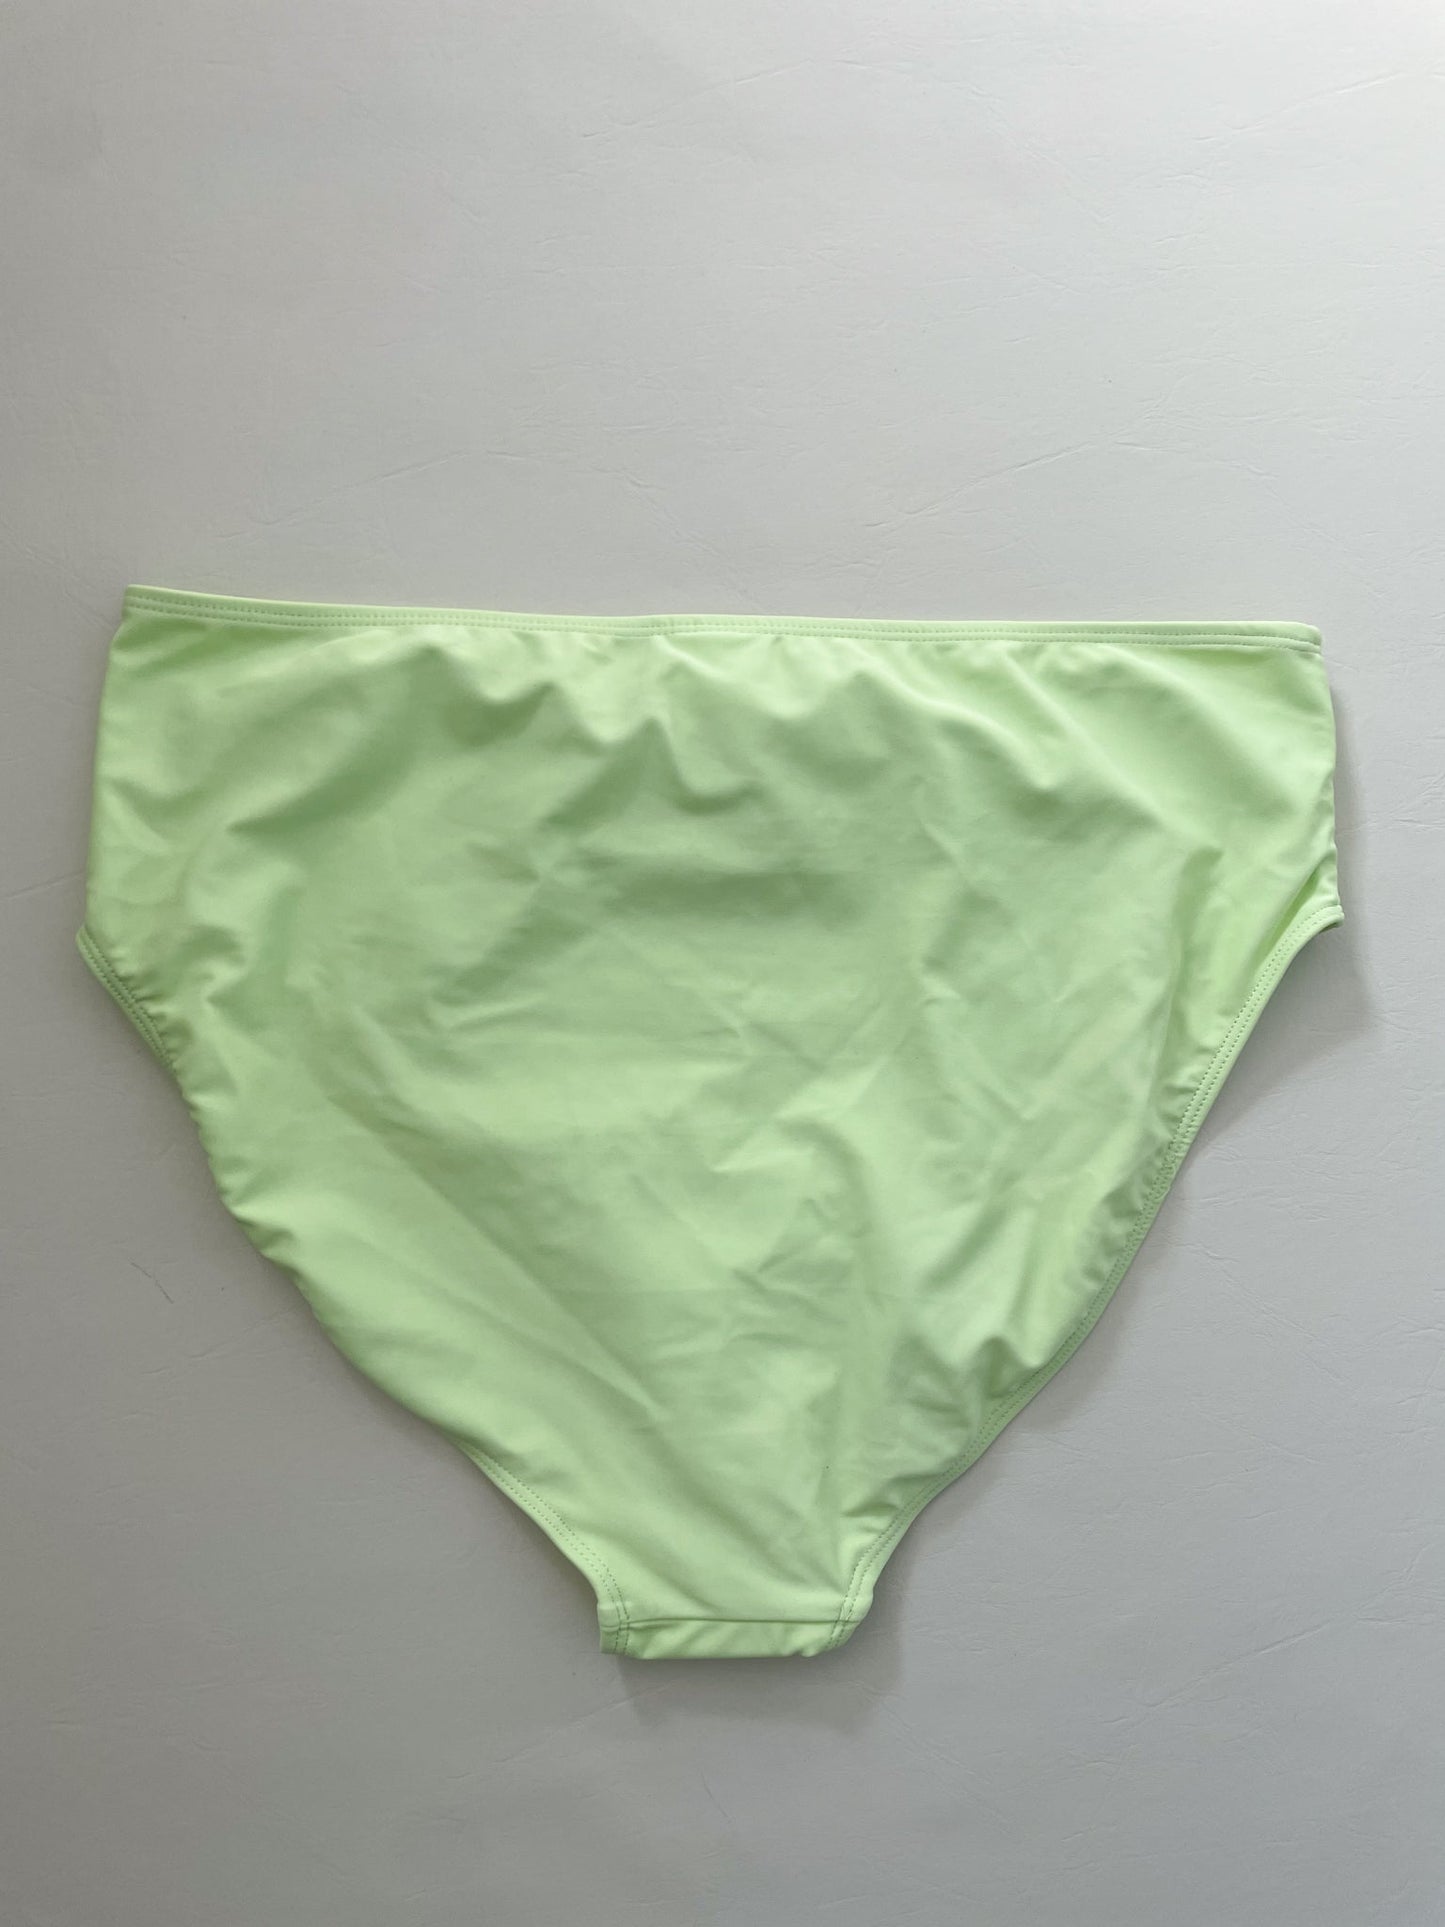 Island Soul Curve Citron Green High Waisted Bikini Bottoms NWOT - 1X